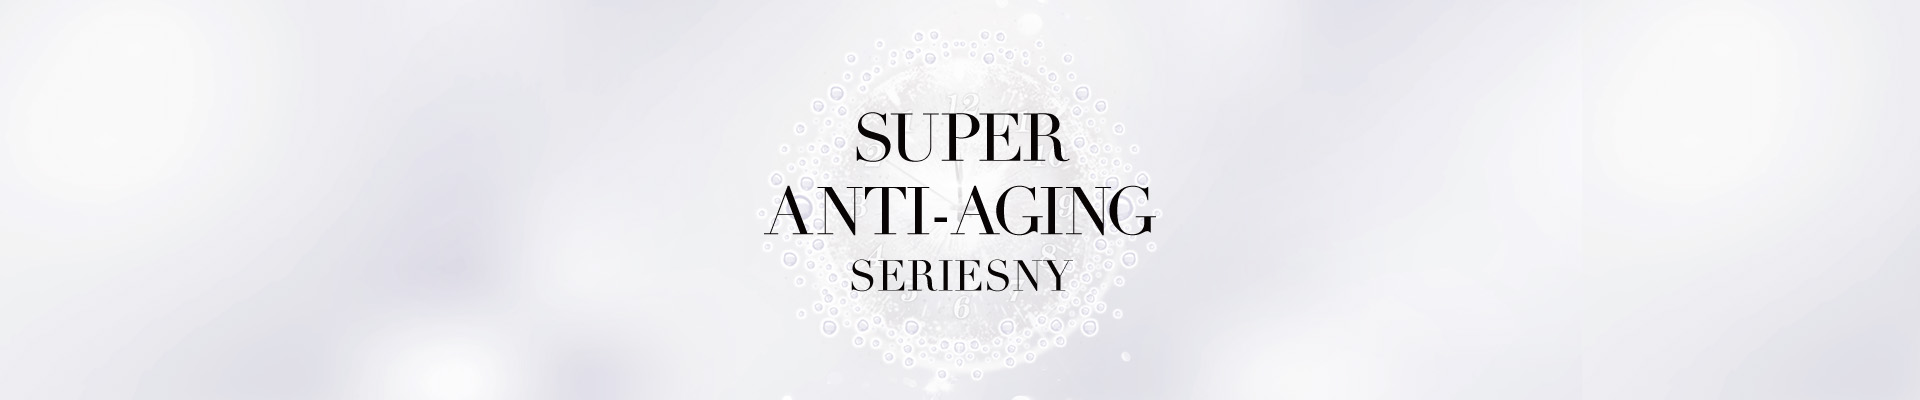 Anti-aging Series